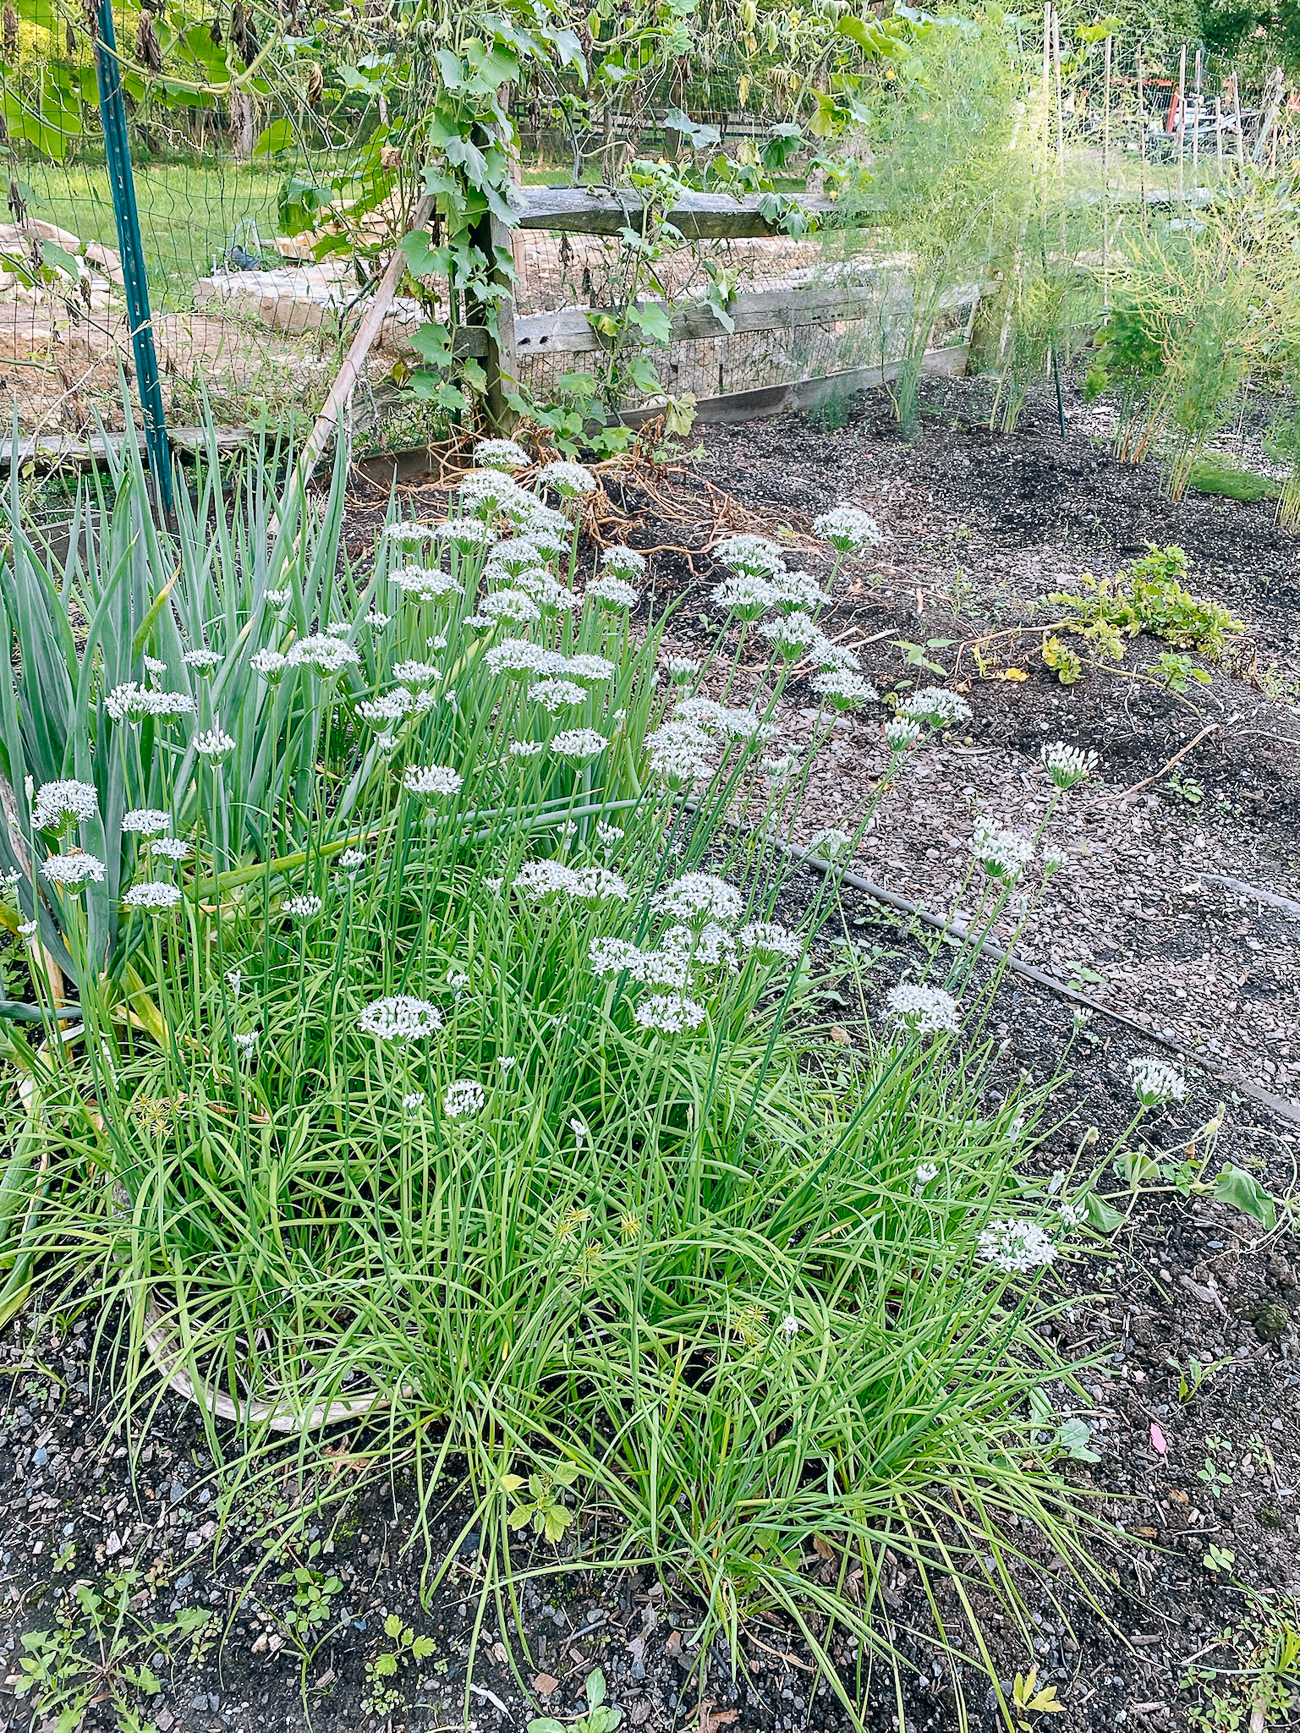 garlic chive plants in flower